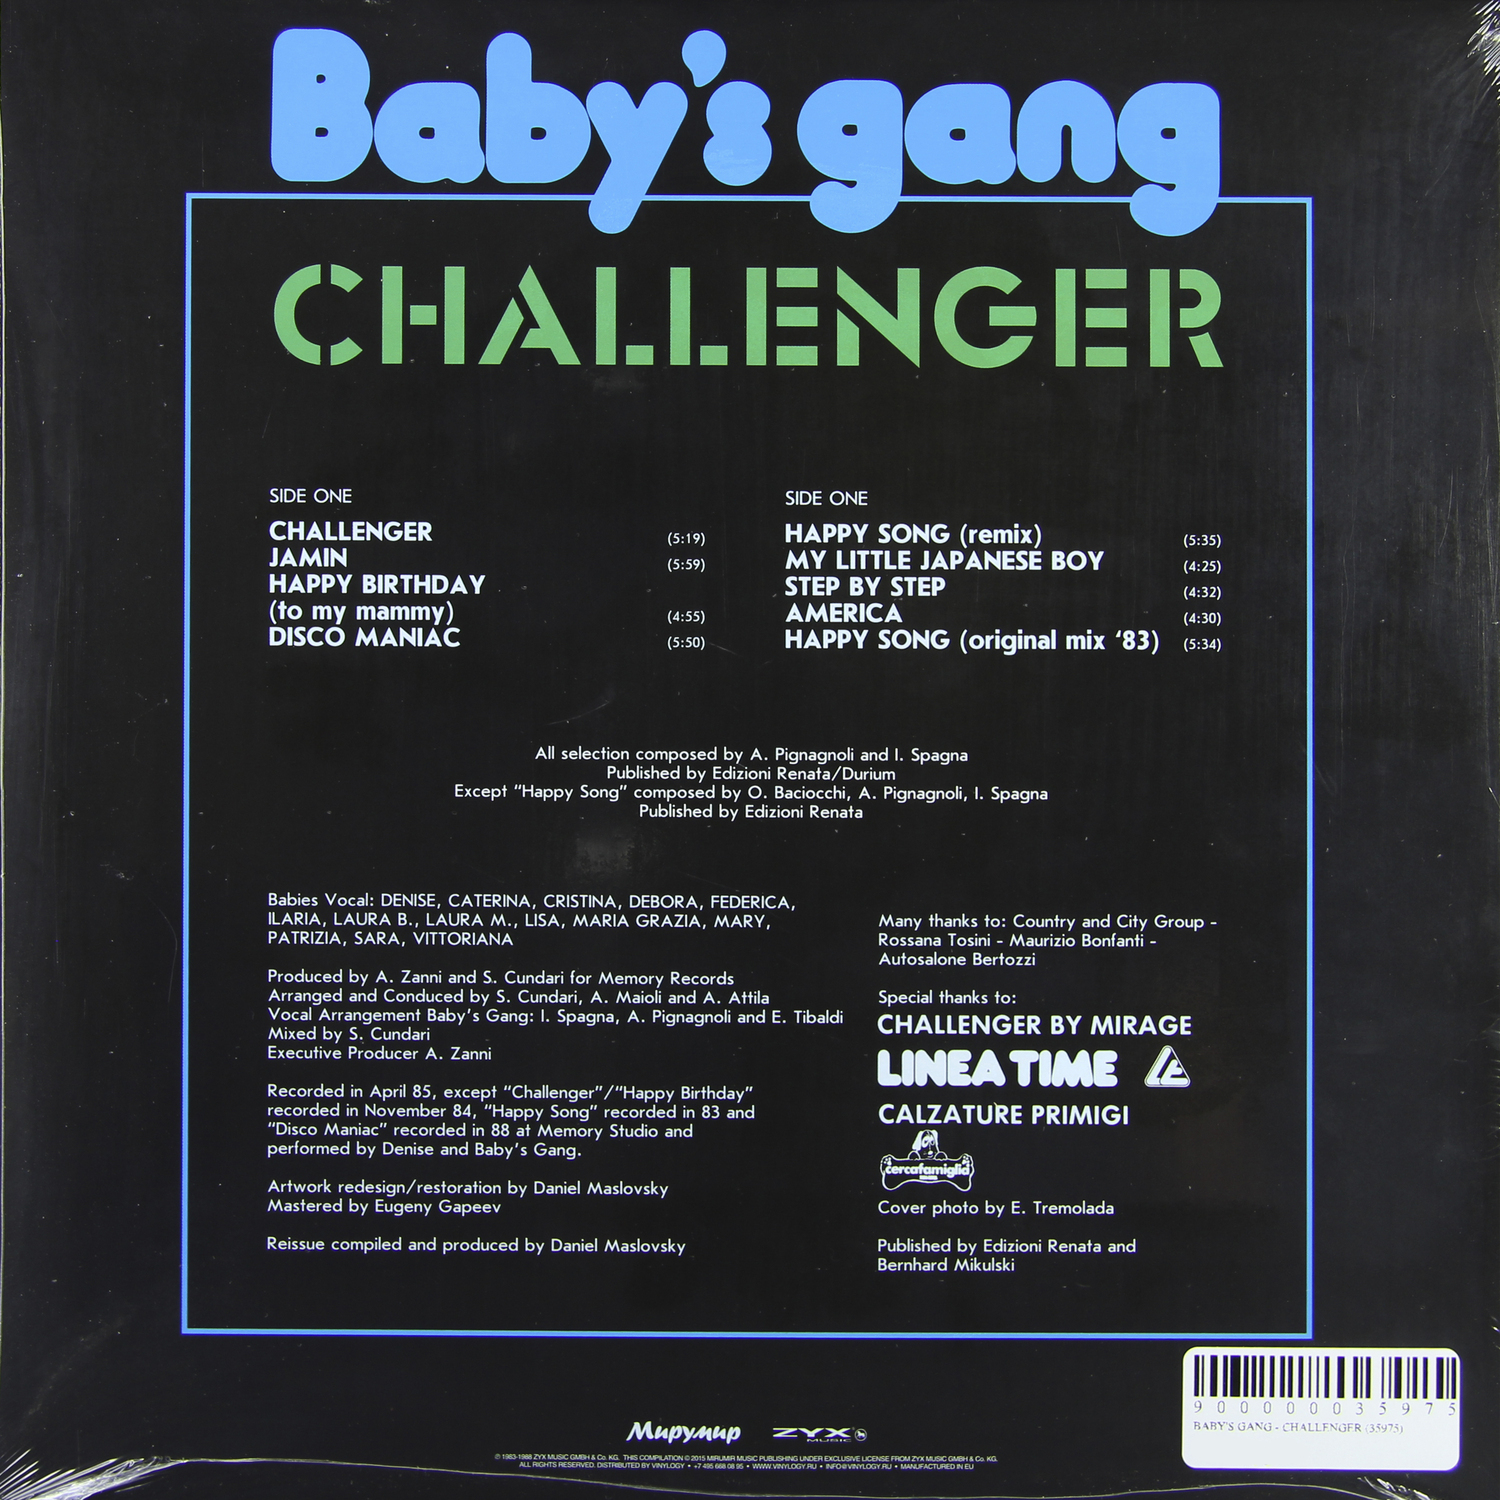 Mentalite baby gang slowed. Baby s gang пластинка. Baby's gang Challenger фотоальбом. Группа Challenger 1985 Baby gang. Babys gang Challenger винил.